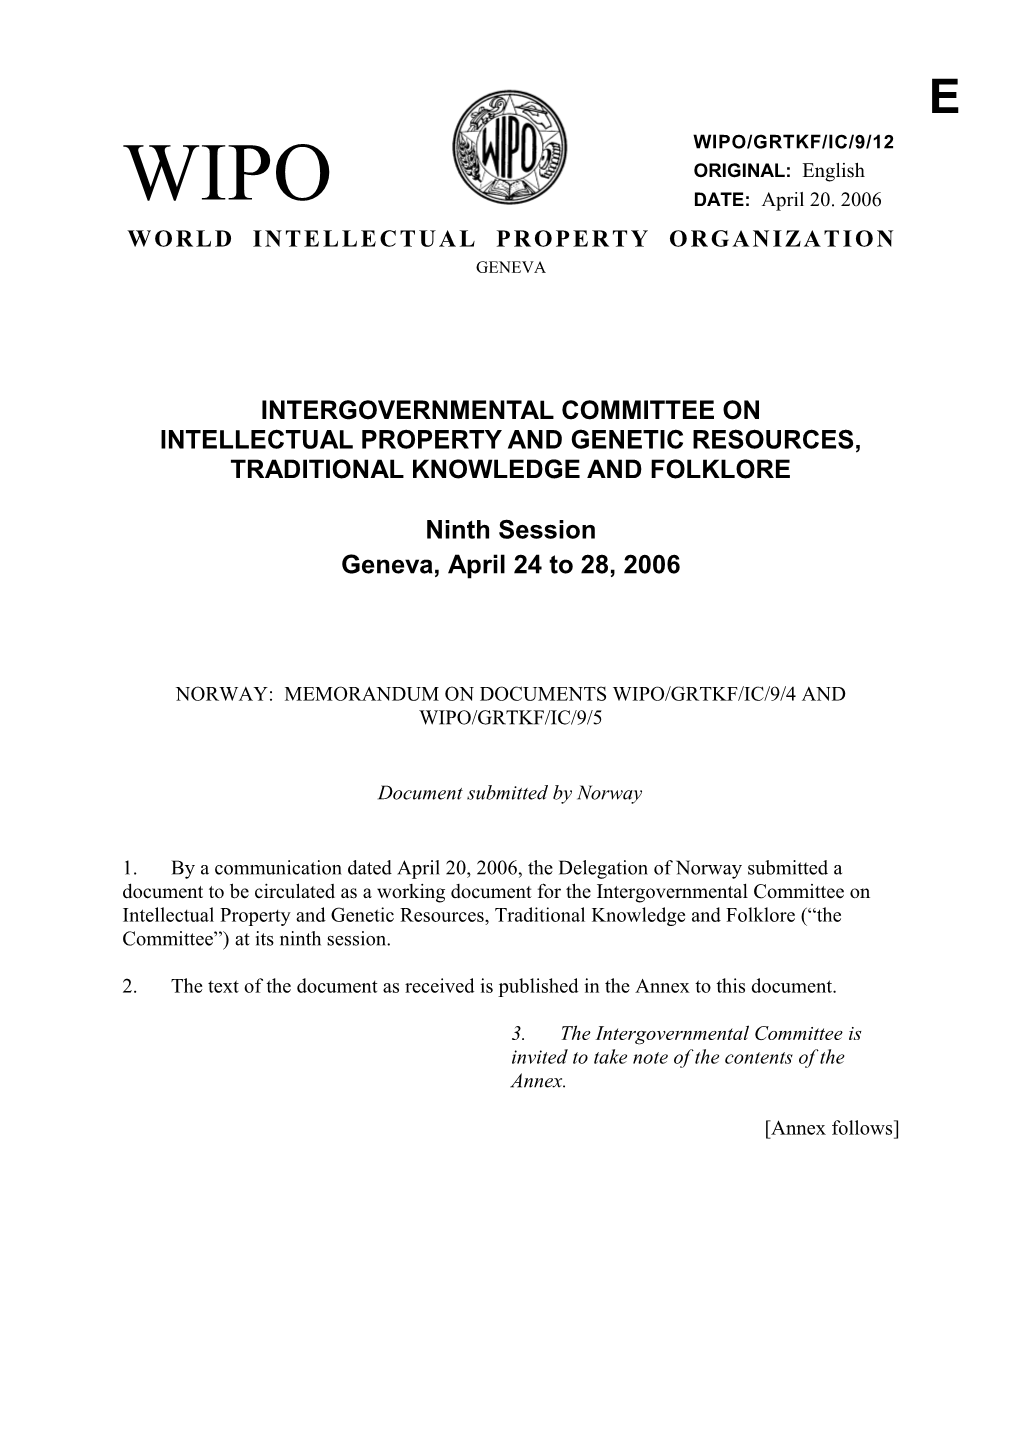 WIPO/GRTKF/IC/9/12: Norway: Memorandum on Documents WIPO/GRKTF/IC/9/4 and WIPO/GRKTF/IC/9/5